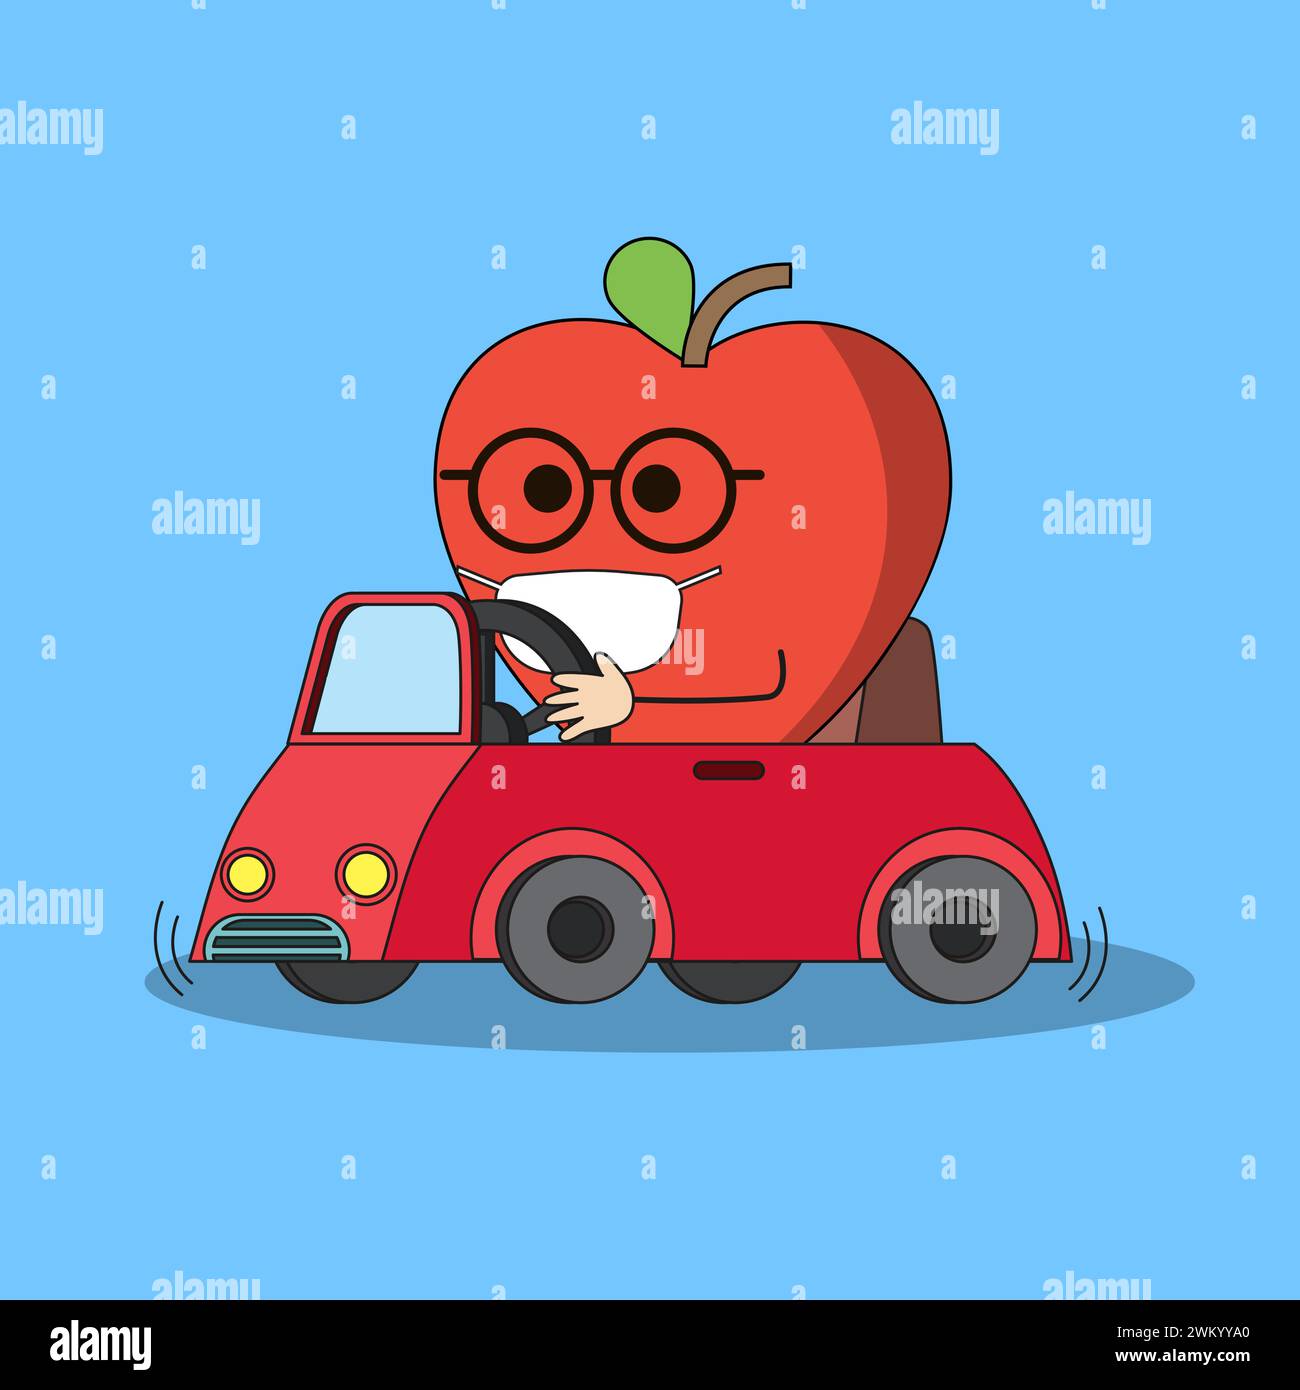 Art illustration Doodle Kawaii Fruits Symbol Character Apple Mascot Activity of Drive Car Stock Vector